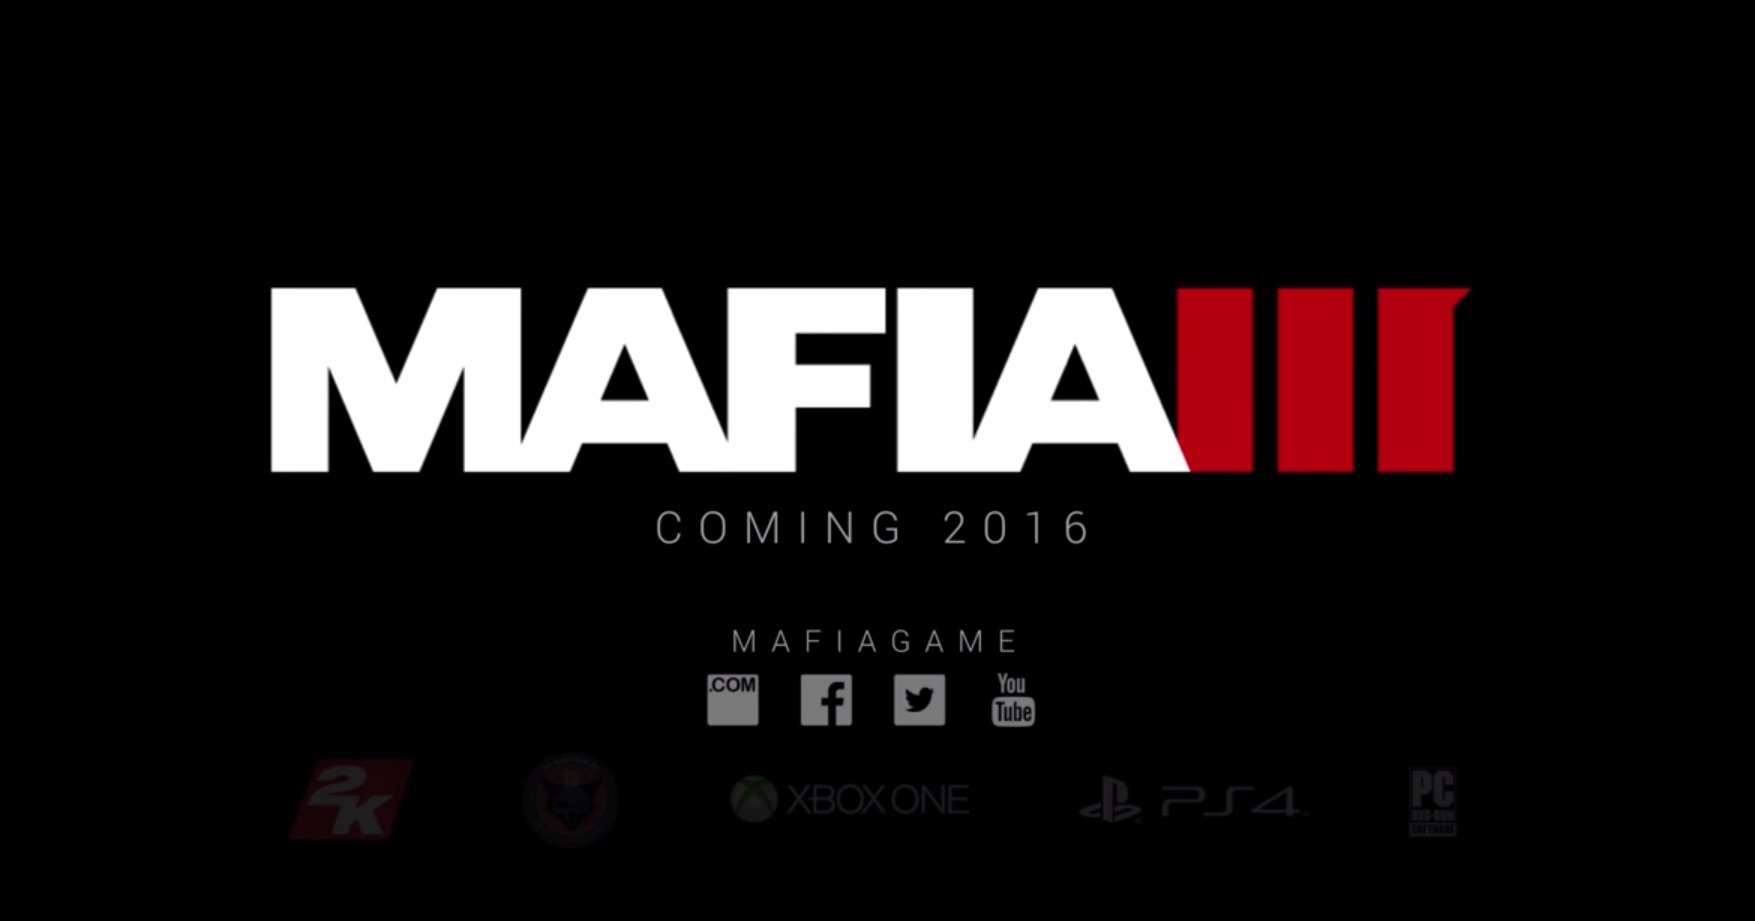 mafia 3 Archives - Gameranx